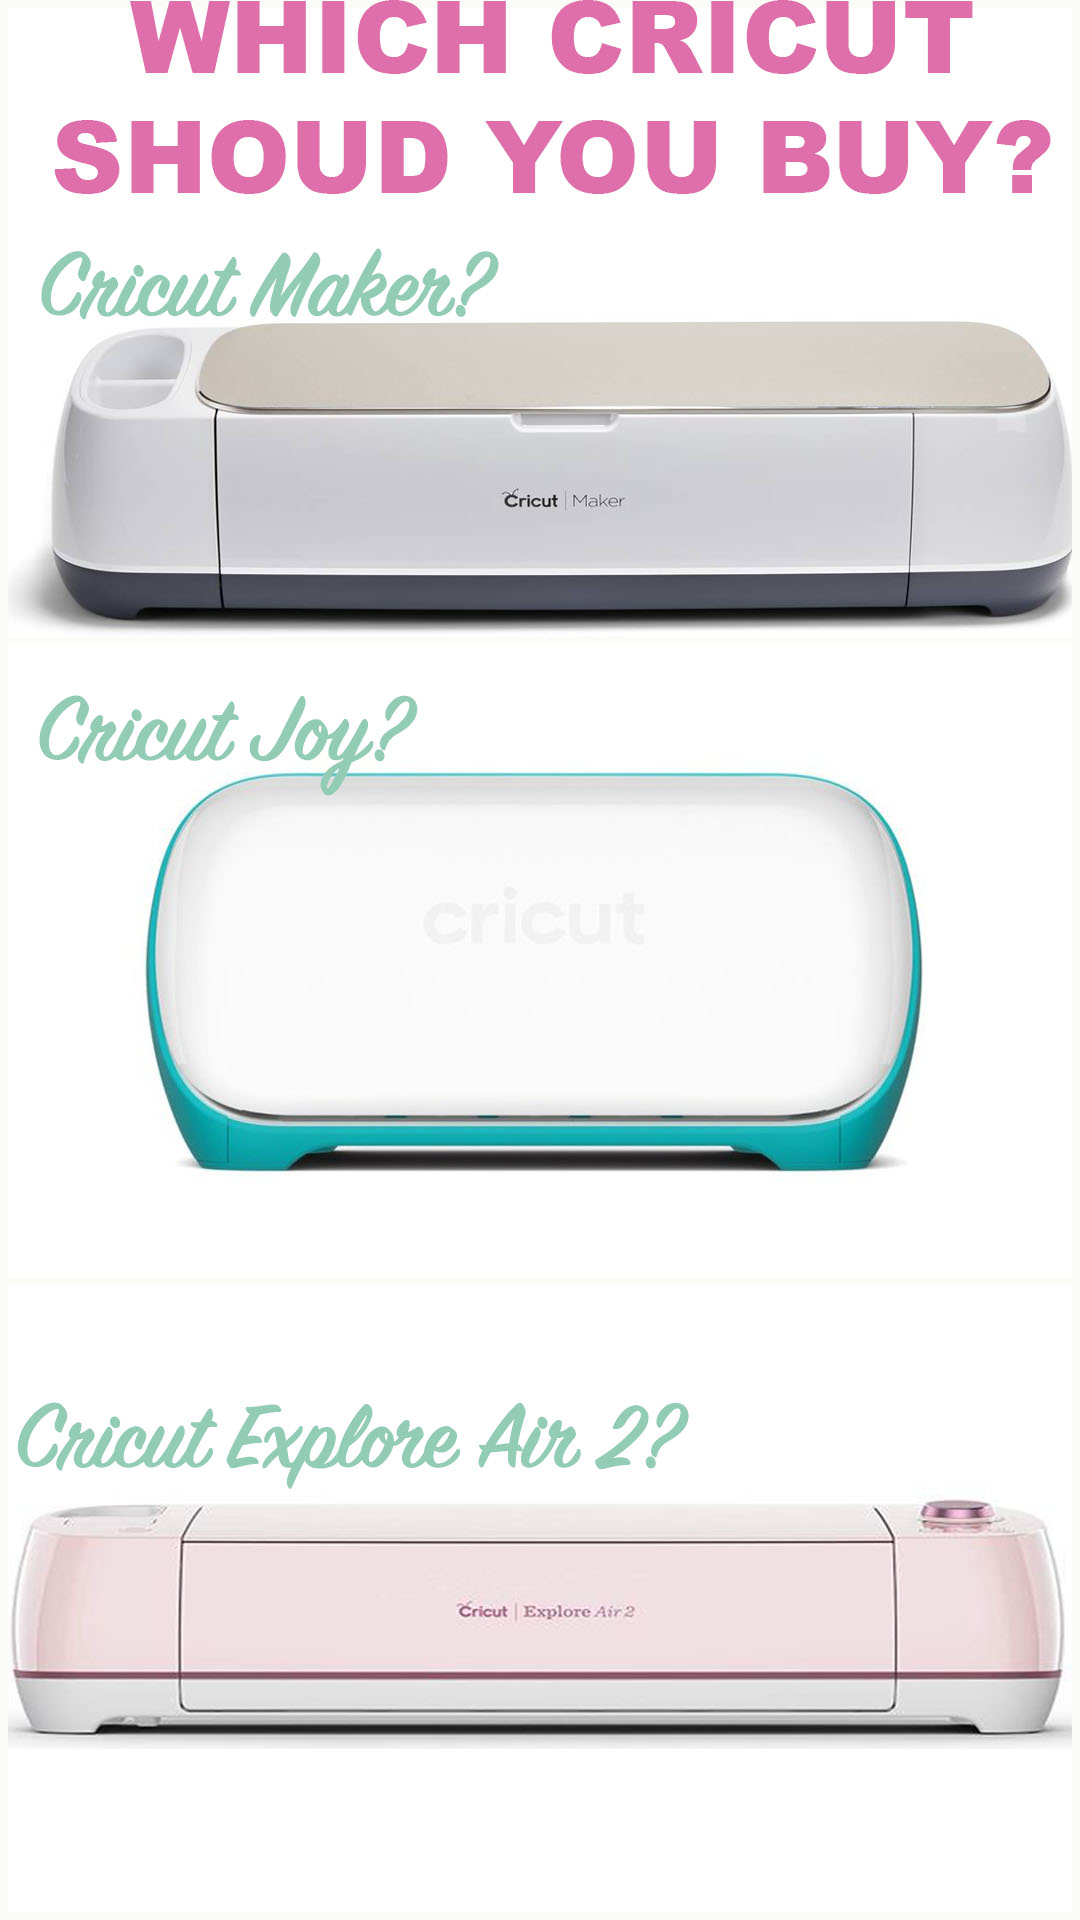 Cricut Explore Air 2 vs Cricut Maker // Which Cricut Machine Should I Buy?  